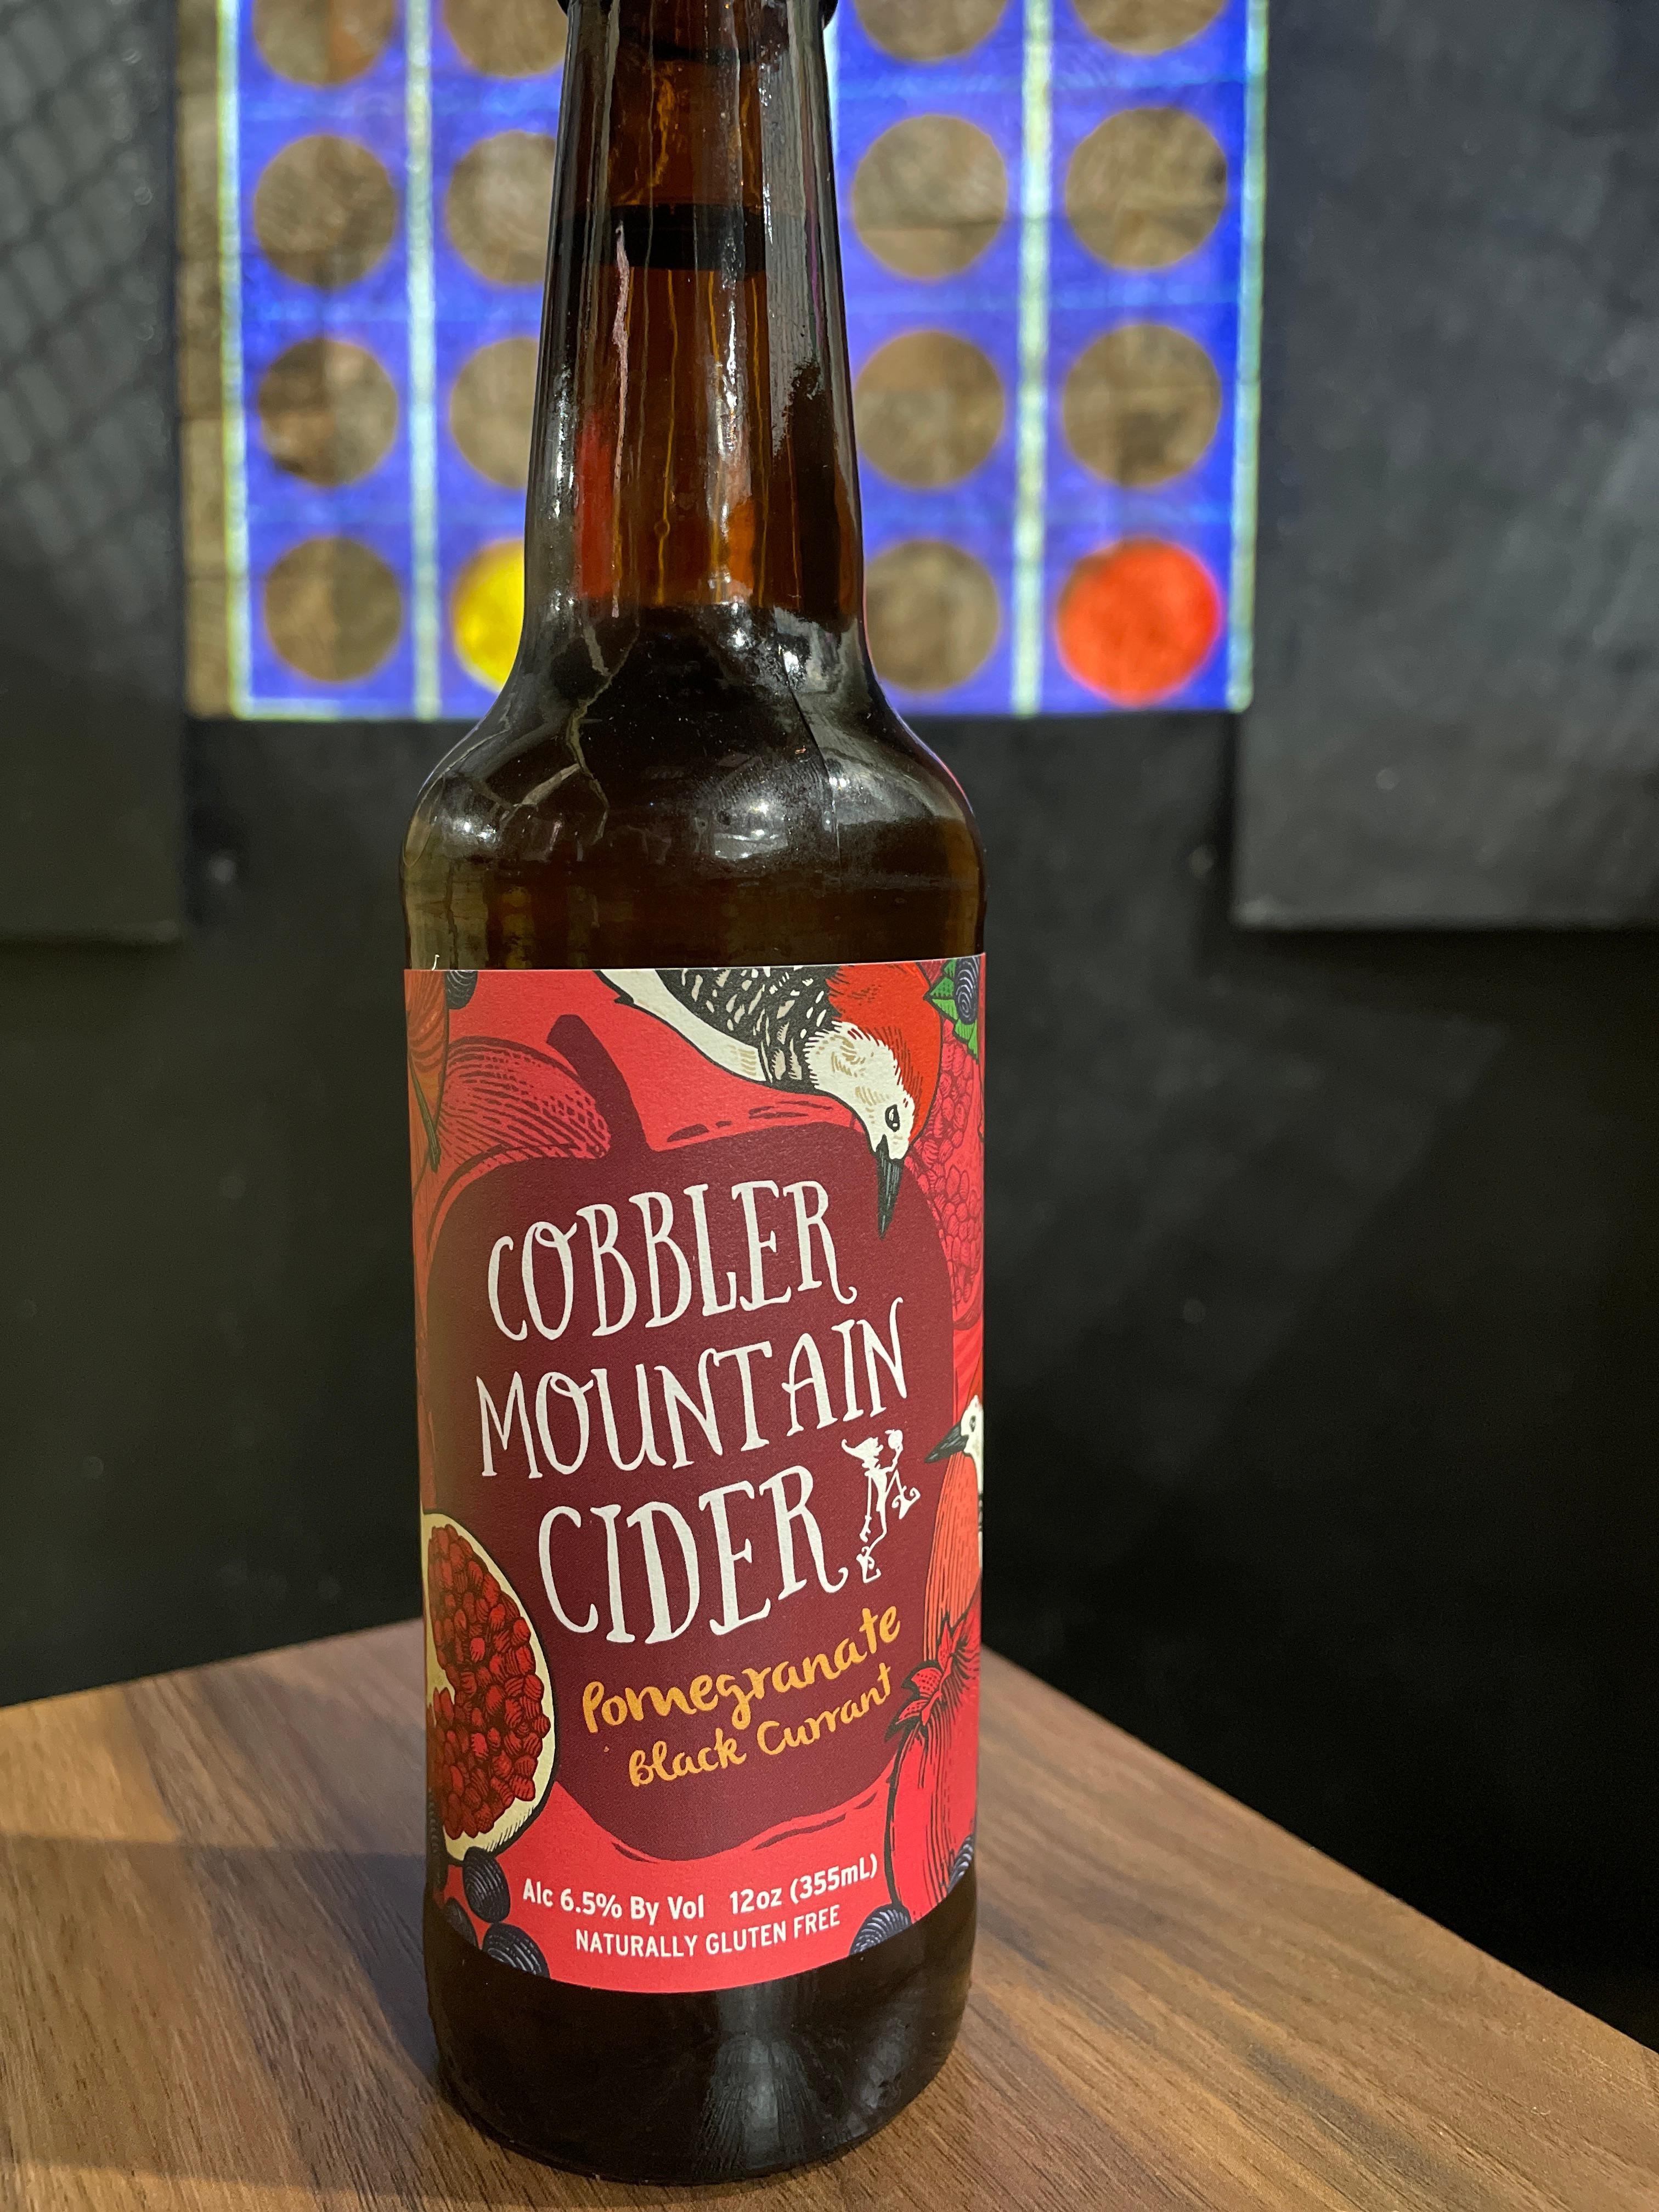 Cobbler Mountain Pomegranate Black Currant Cider